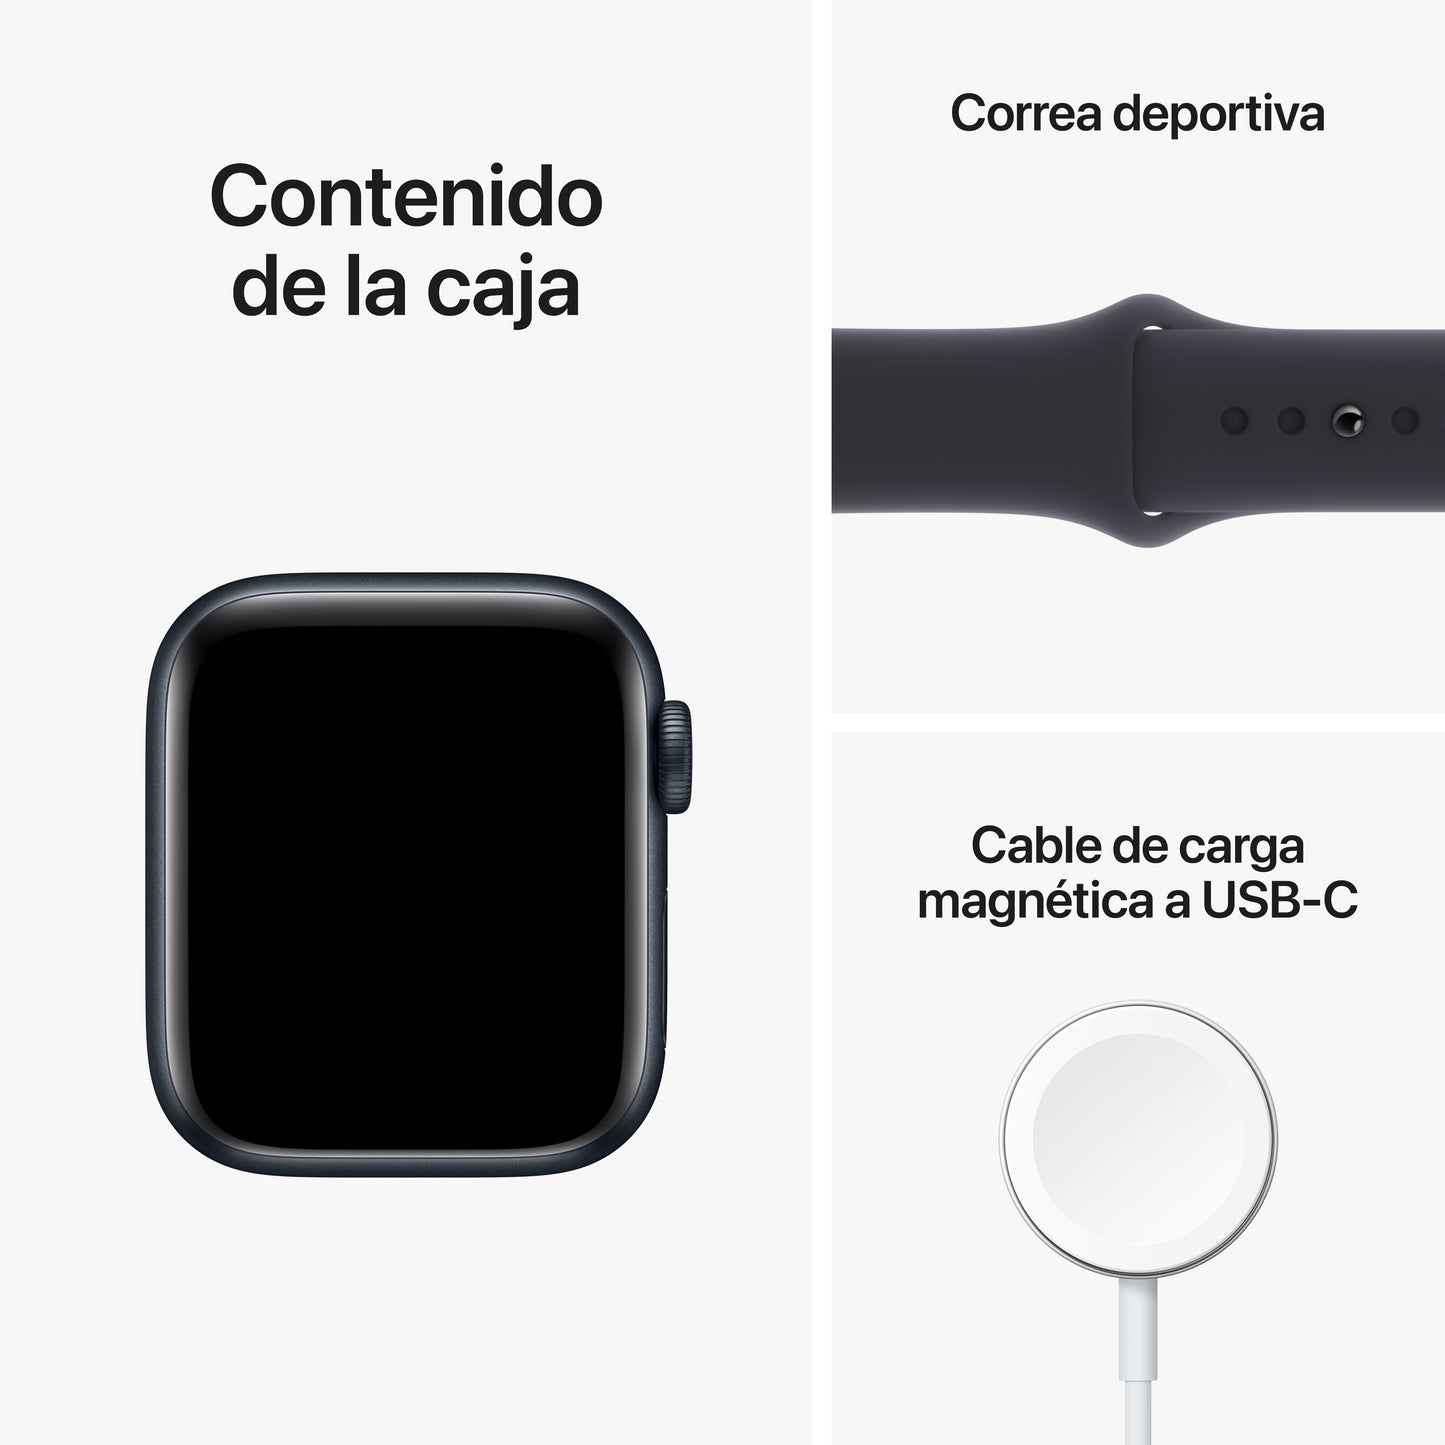 Apple Watch SE (GPS + Cellular) de 40 mm